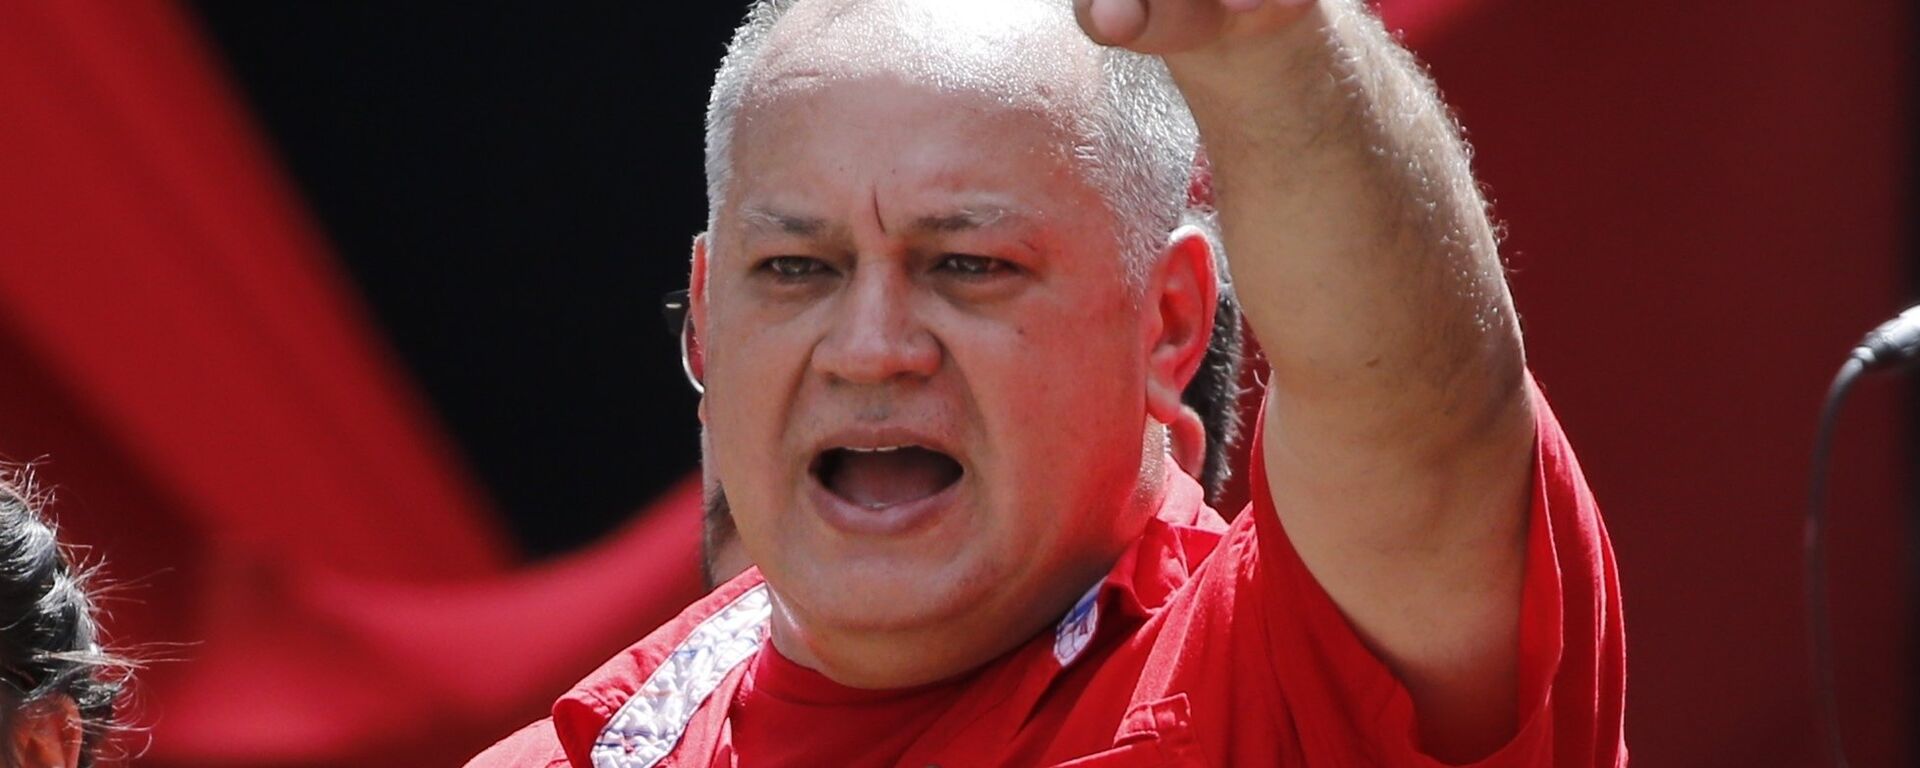 Diosdado Cabello, presidente de la Asamblea Nacional Constituyente de Venezuela - Sputnik Mundo, 1920, 09.11.2021